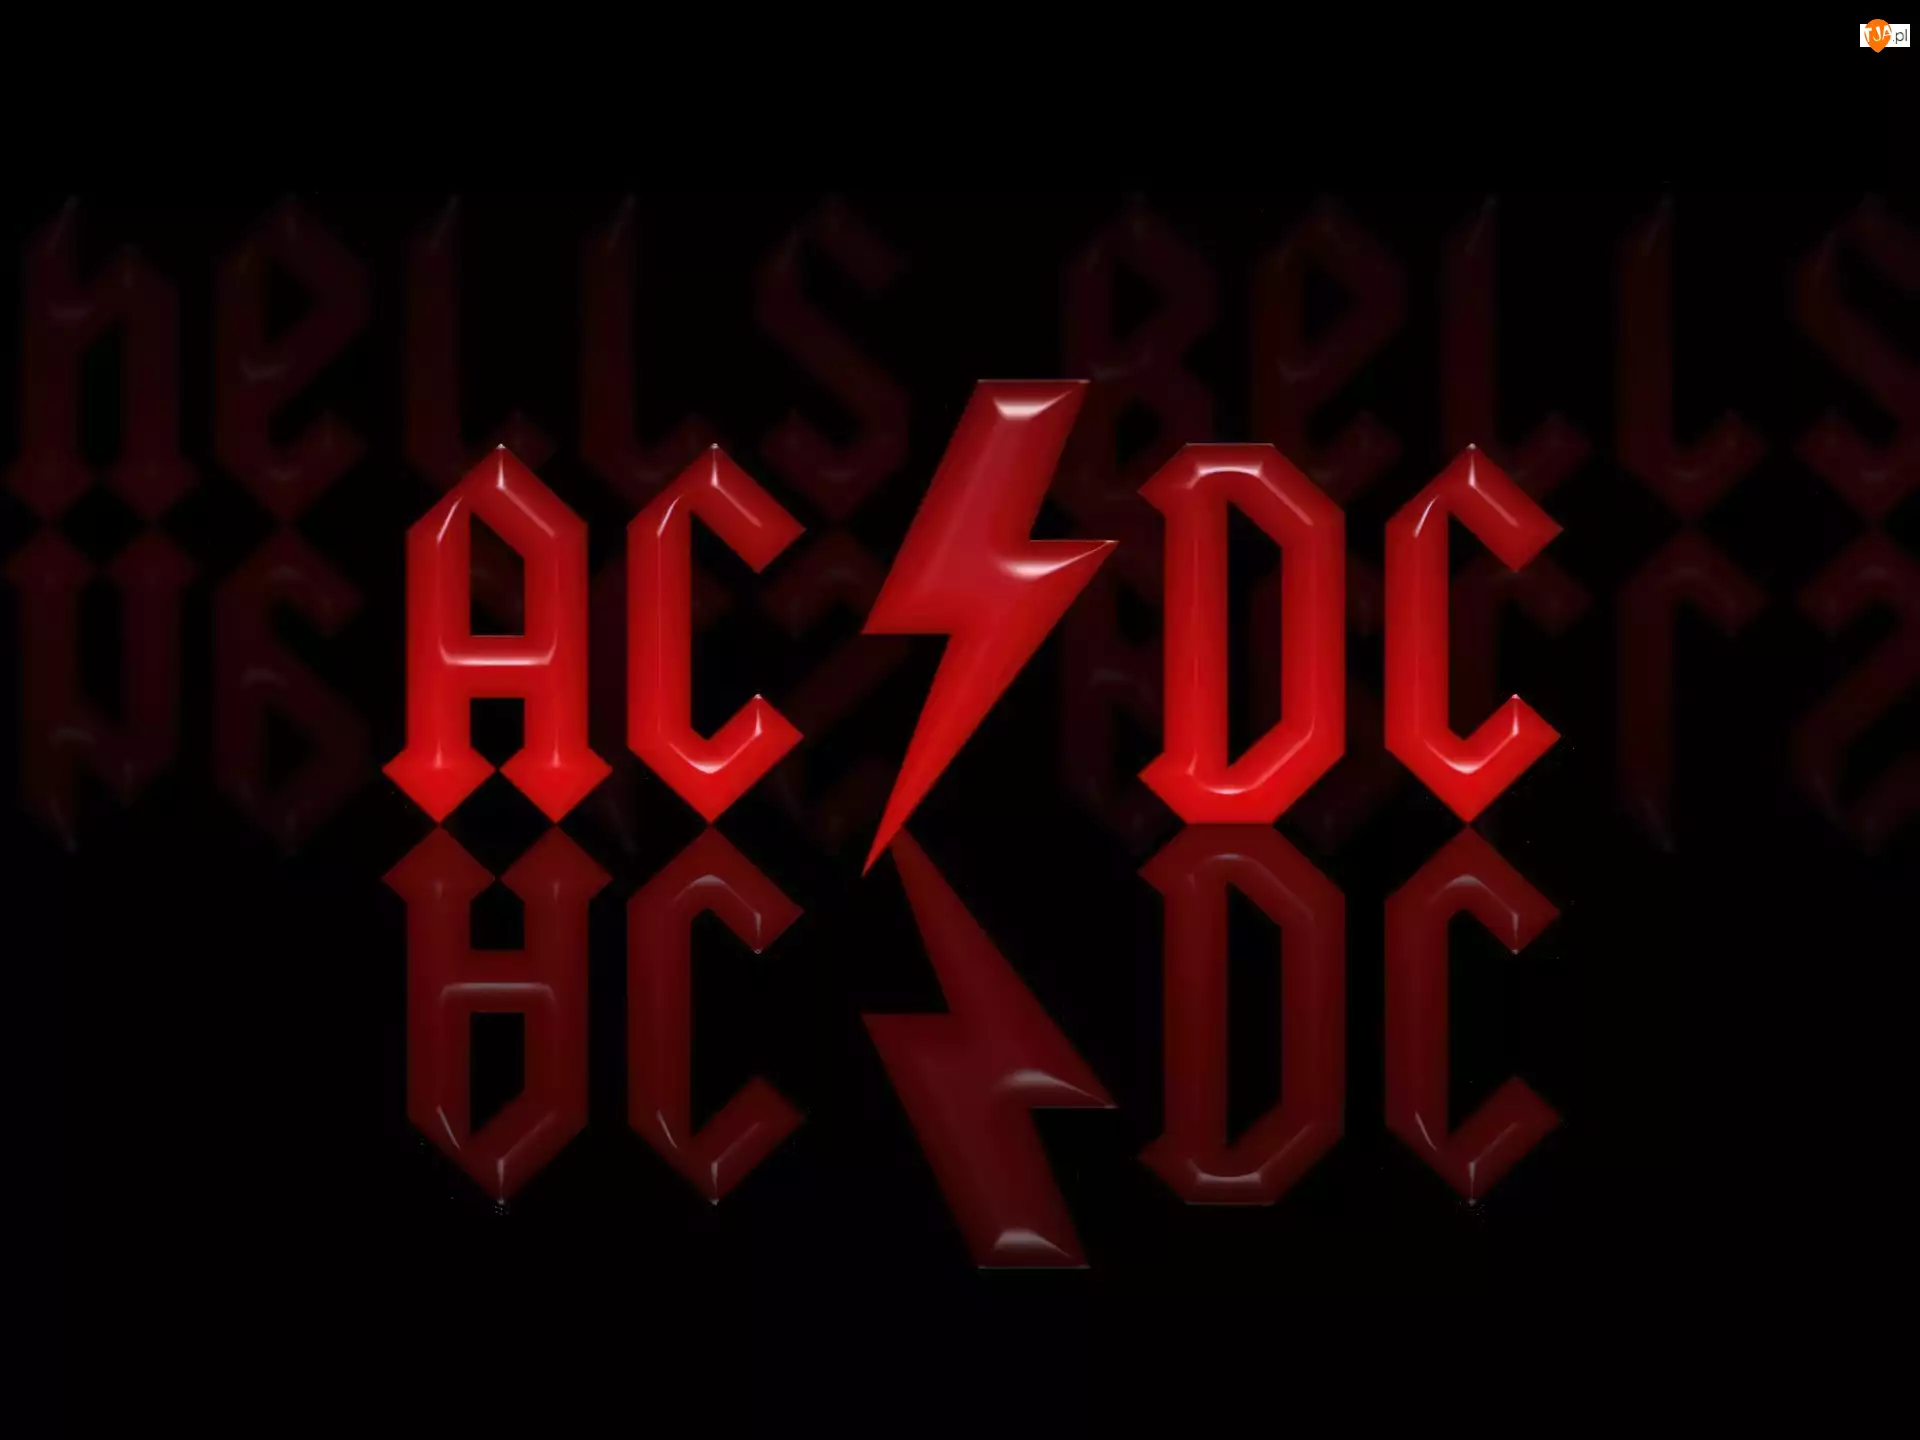 Napis, AC/DC